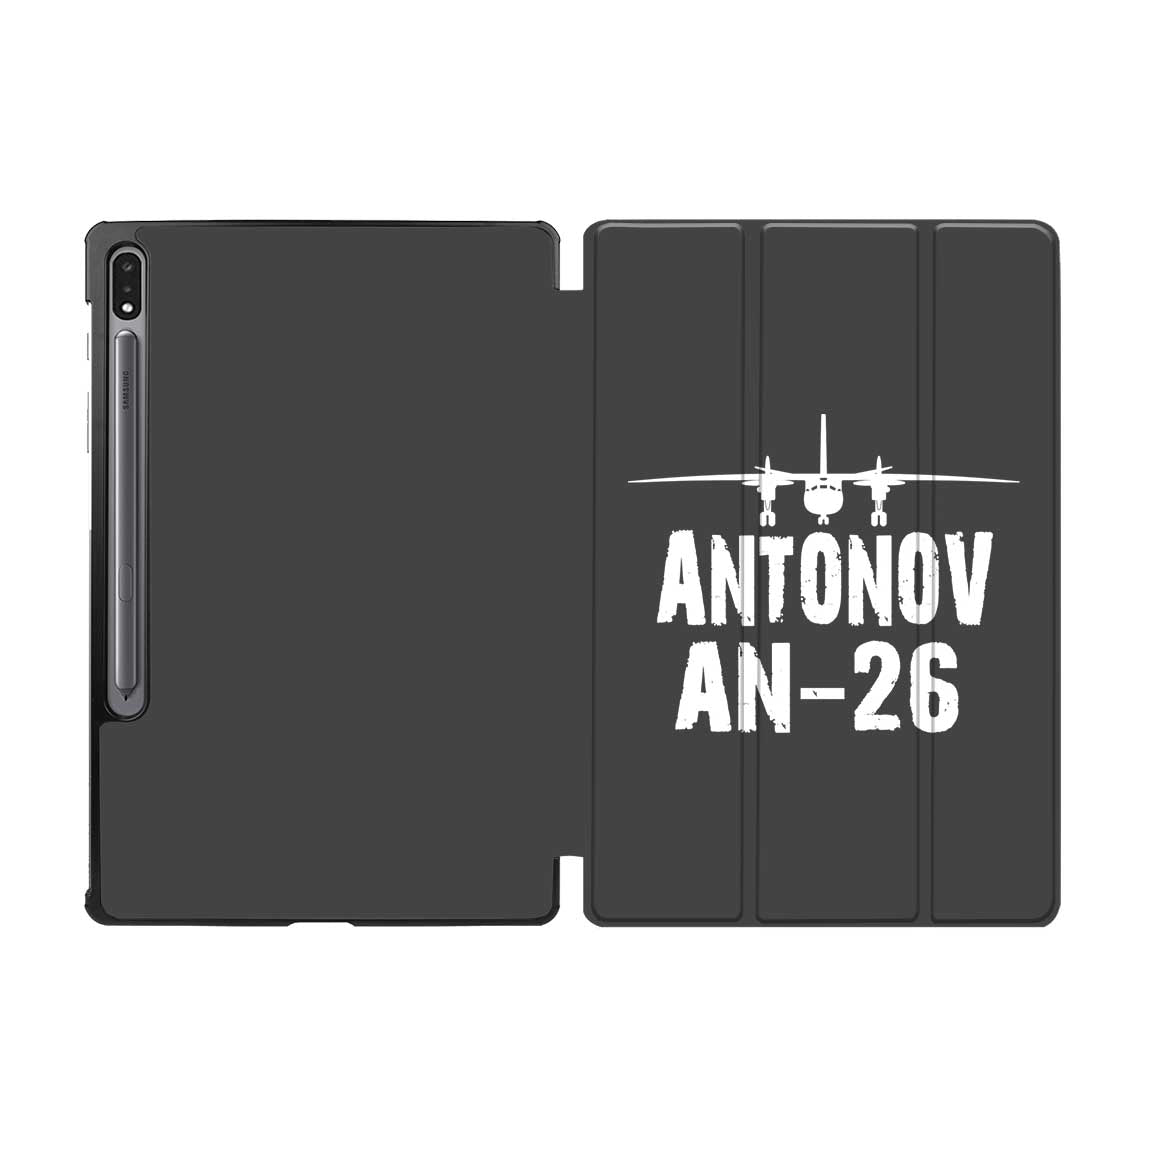 Antonov AN-26 & Plane Designed Samsung Tablet Cases